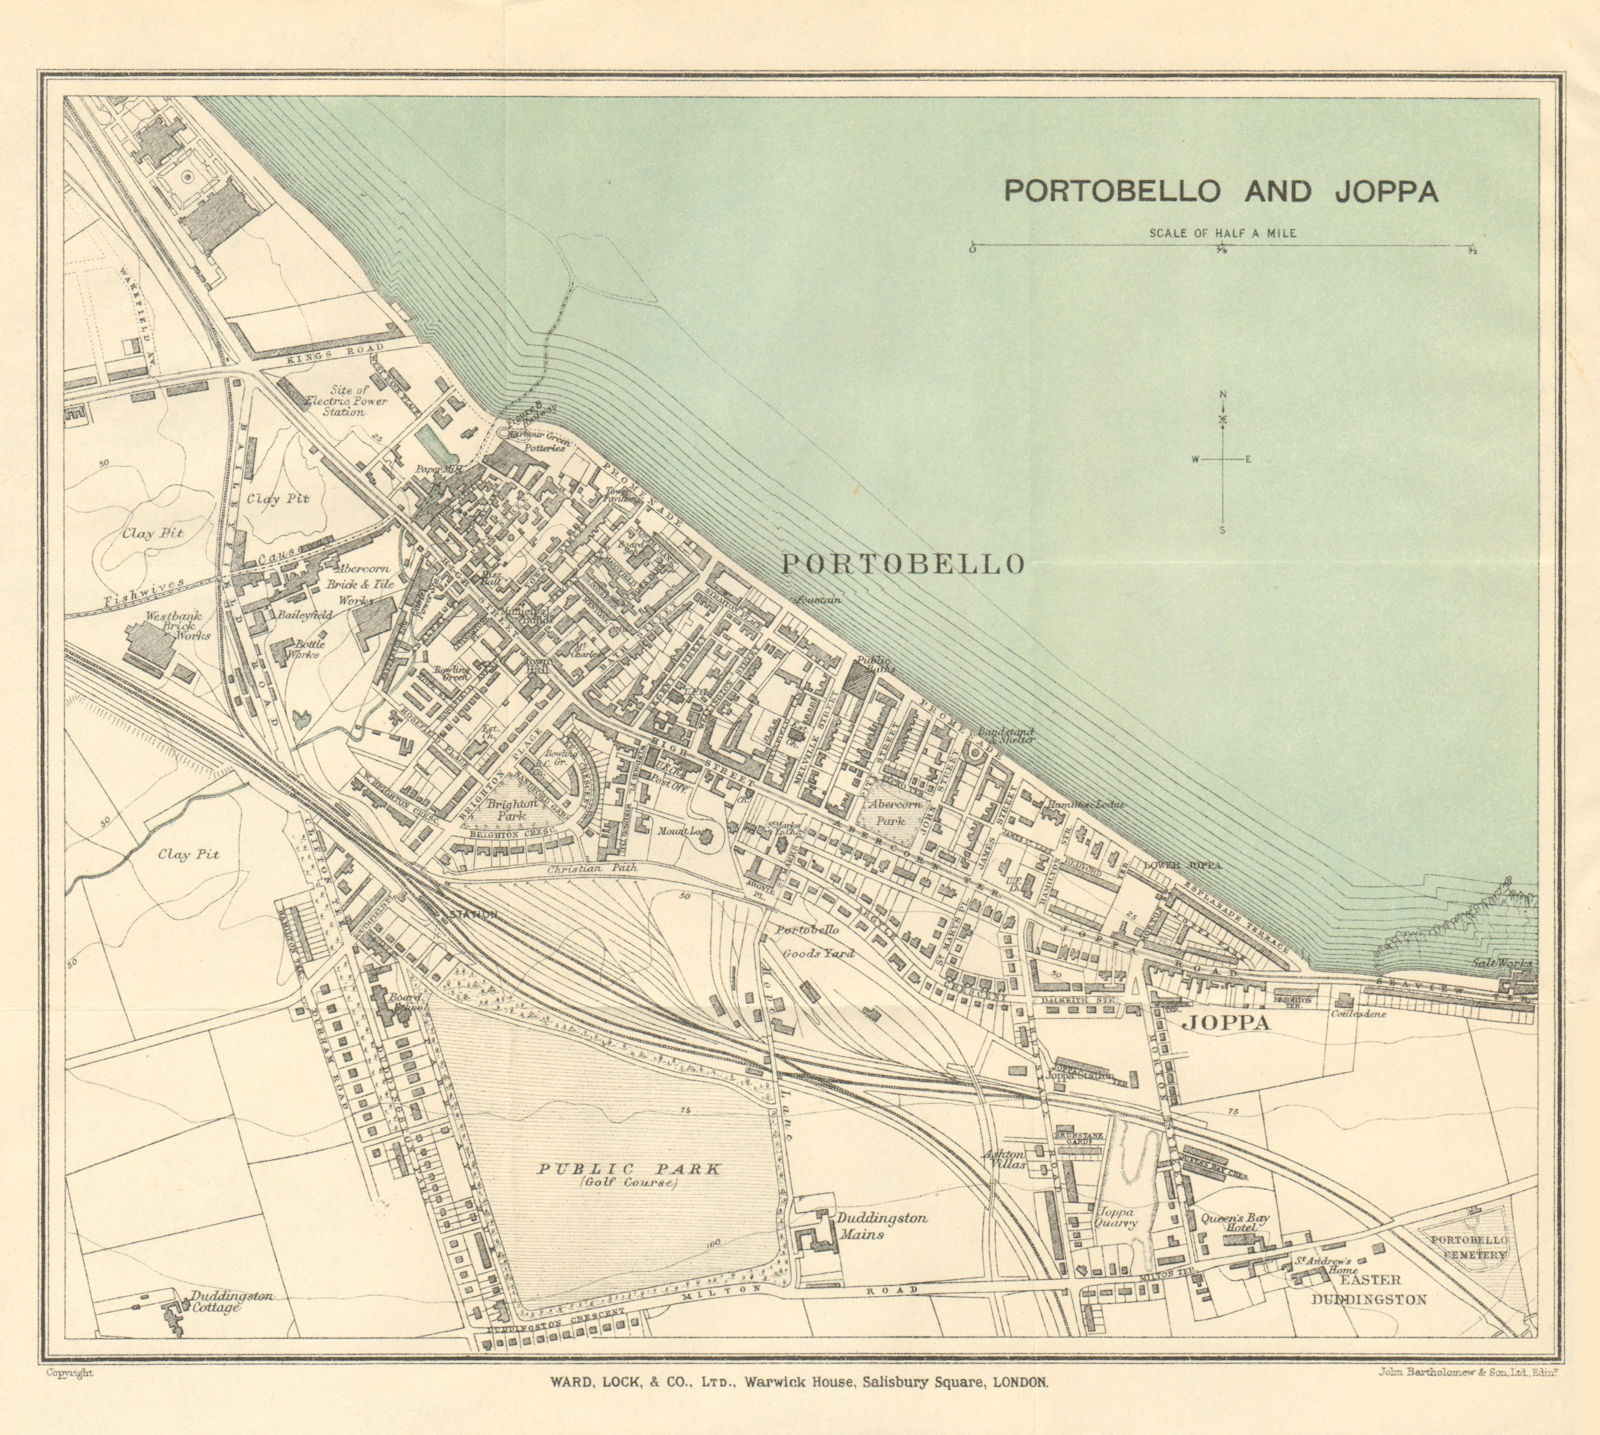 Associate Product PORTOBELLO AND JOPPA vintage town/city plan. Scotland. WARD LOCK 1922 old map